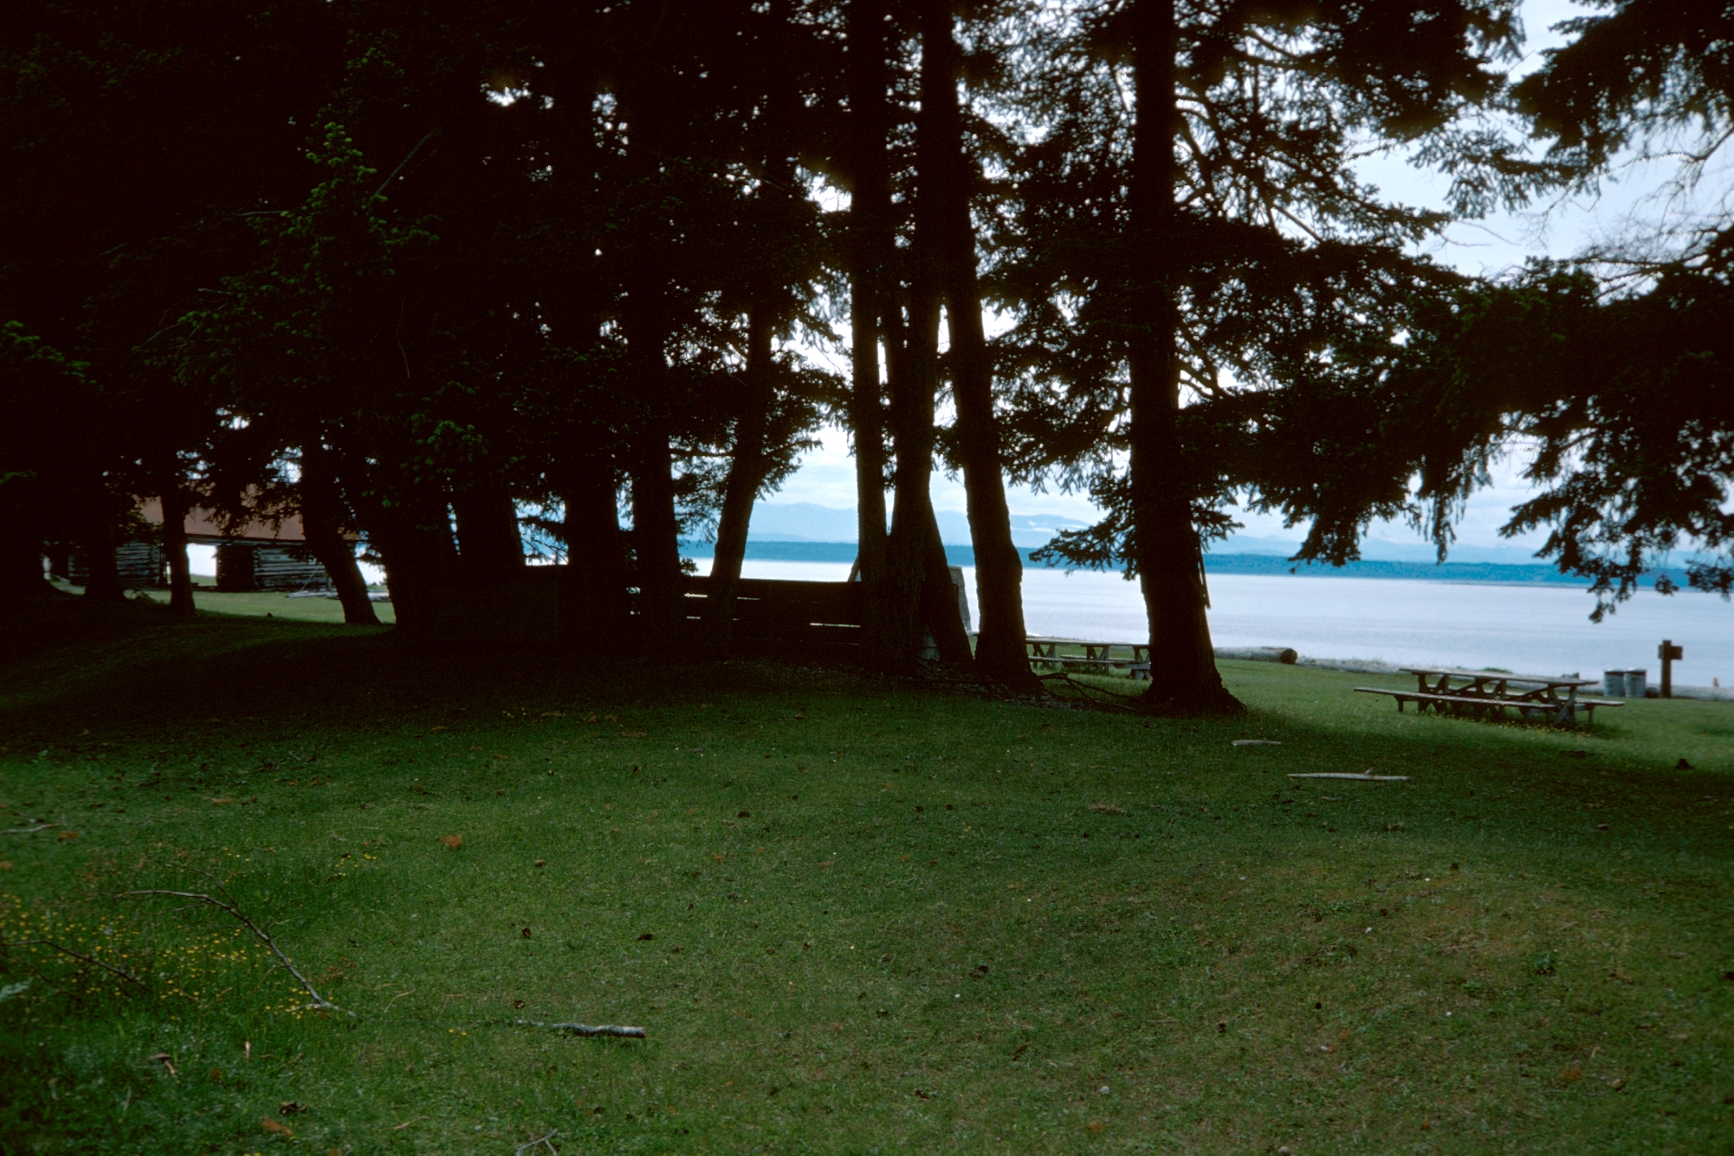 Campsite in Smelt Bay Provincial Park